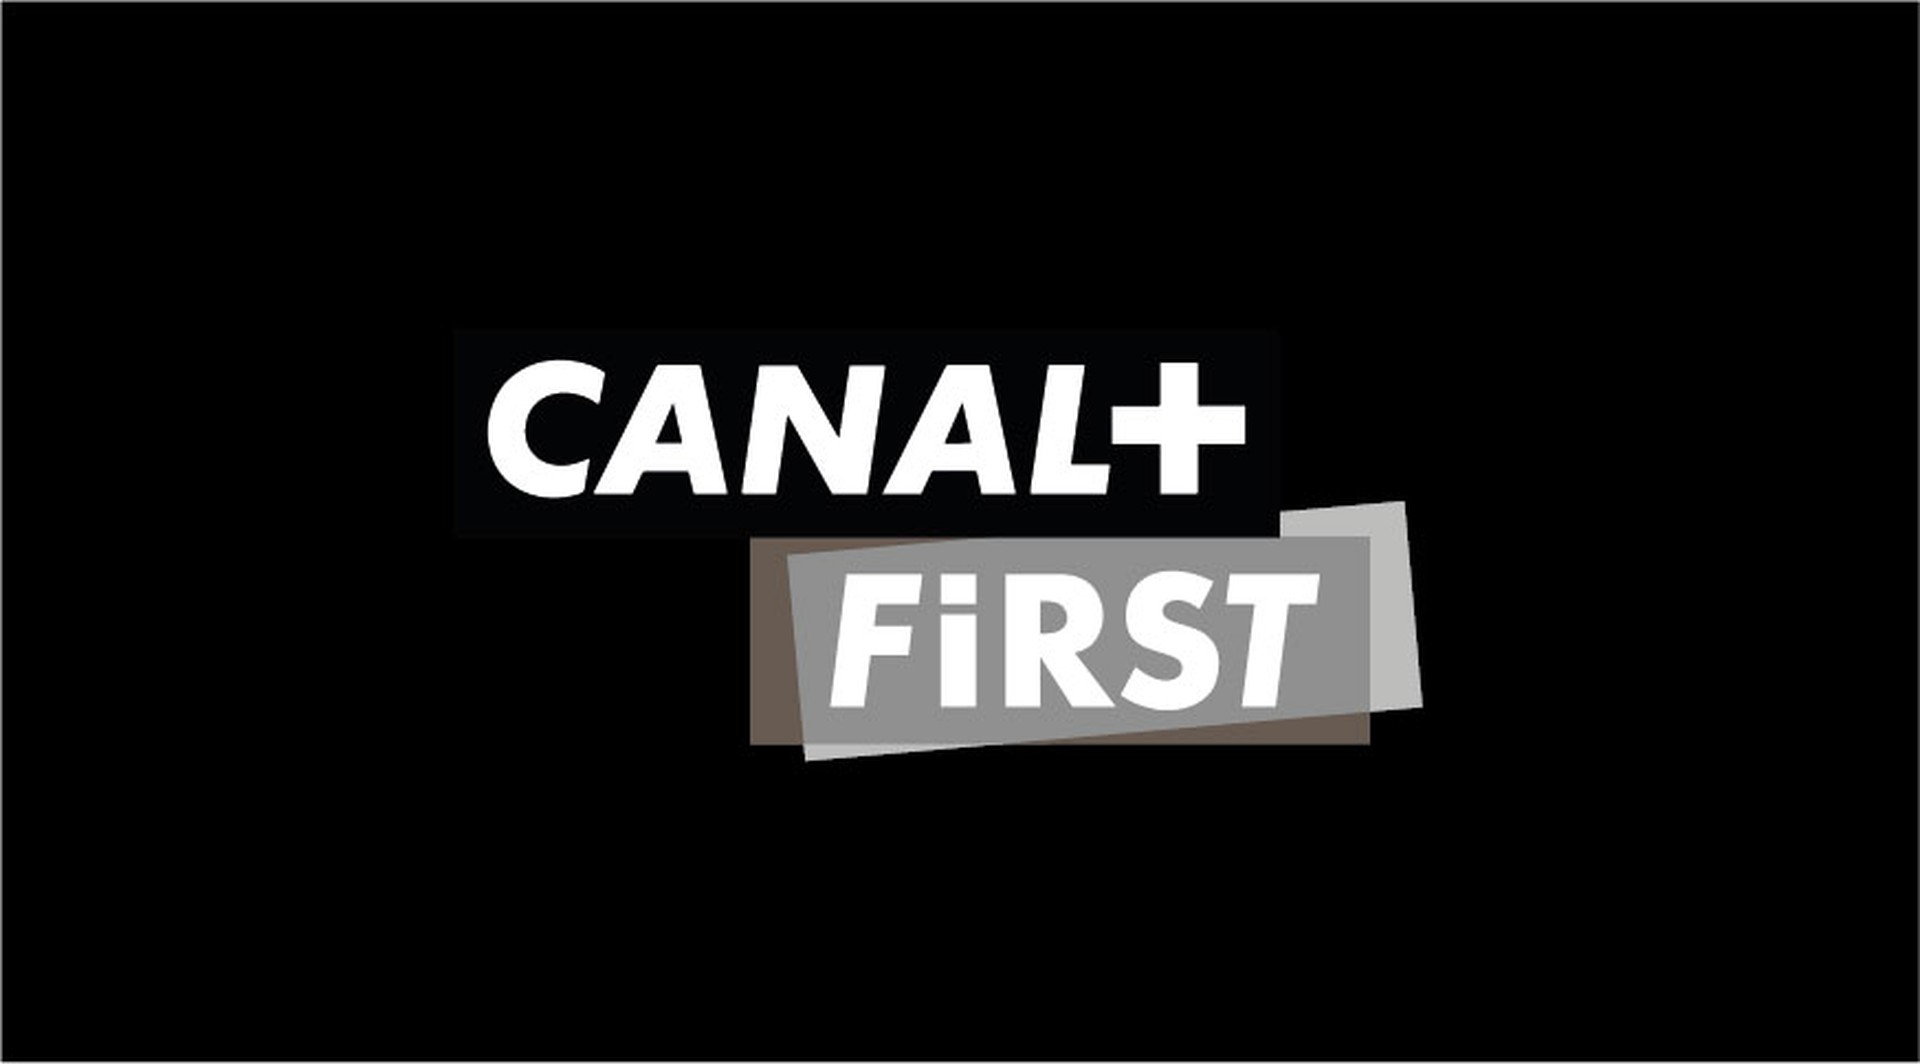 CANAL+ FIRST_LOGO FULL_RGB.jpg